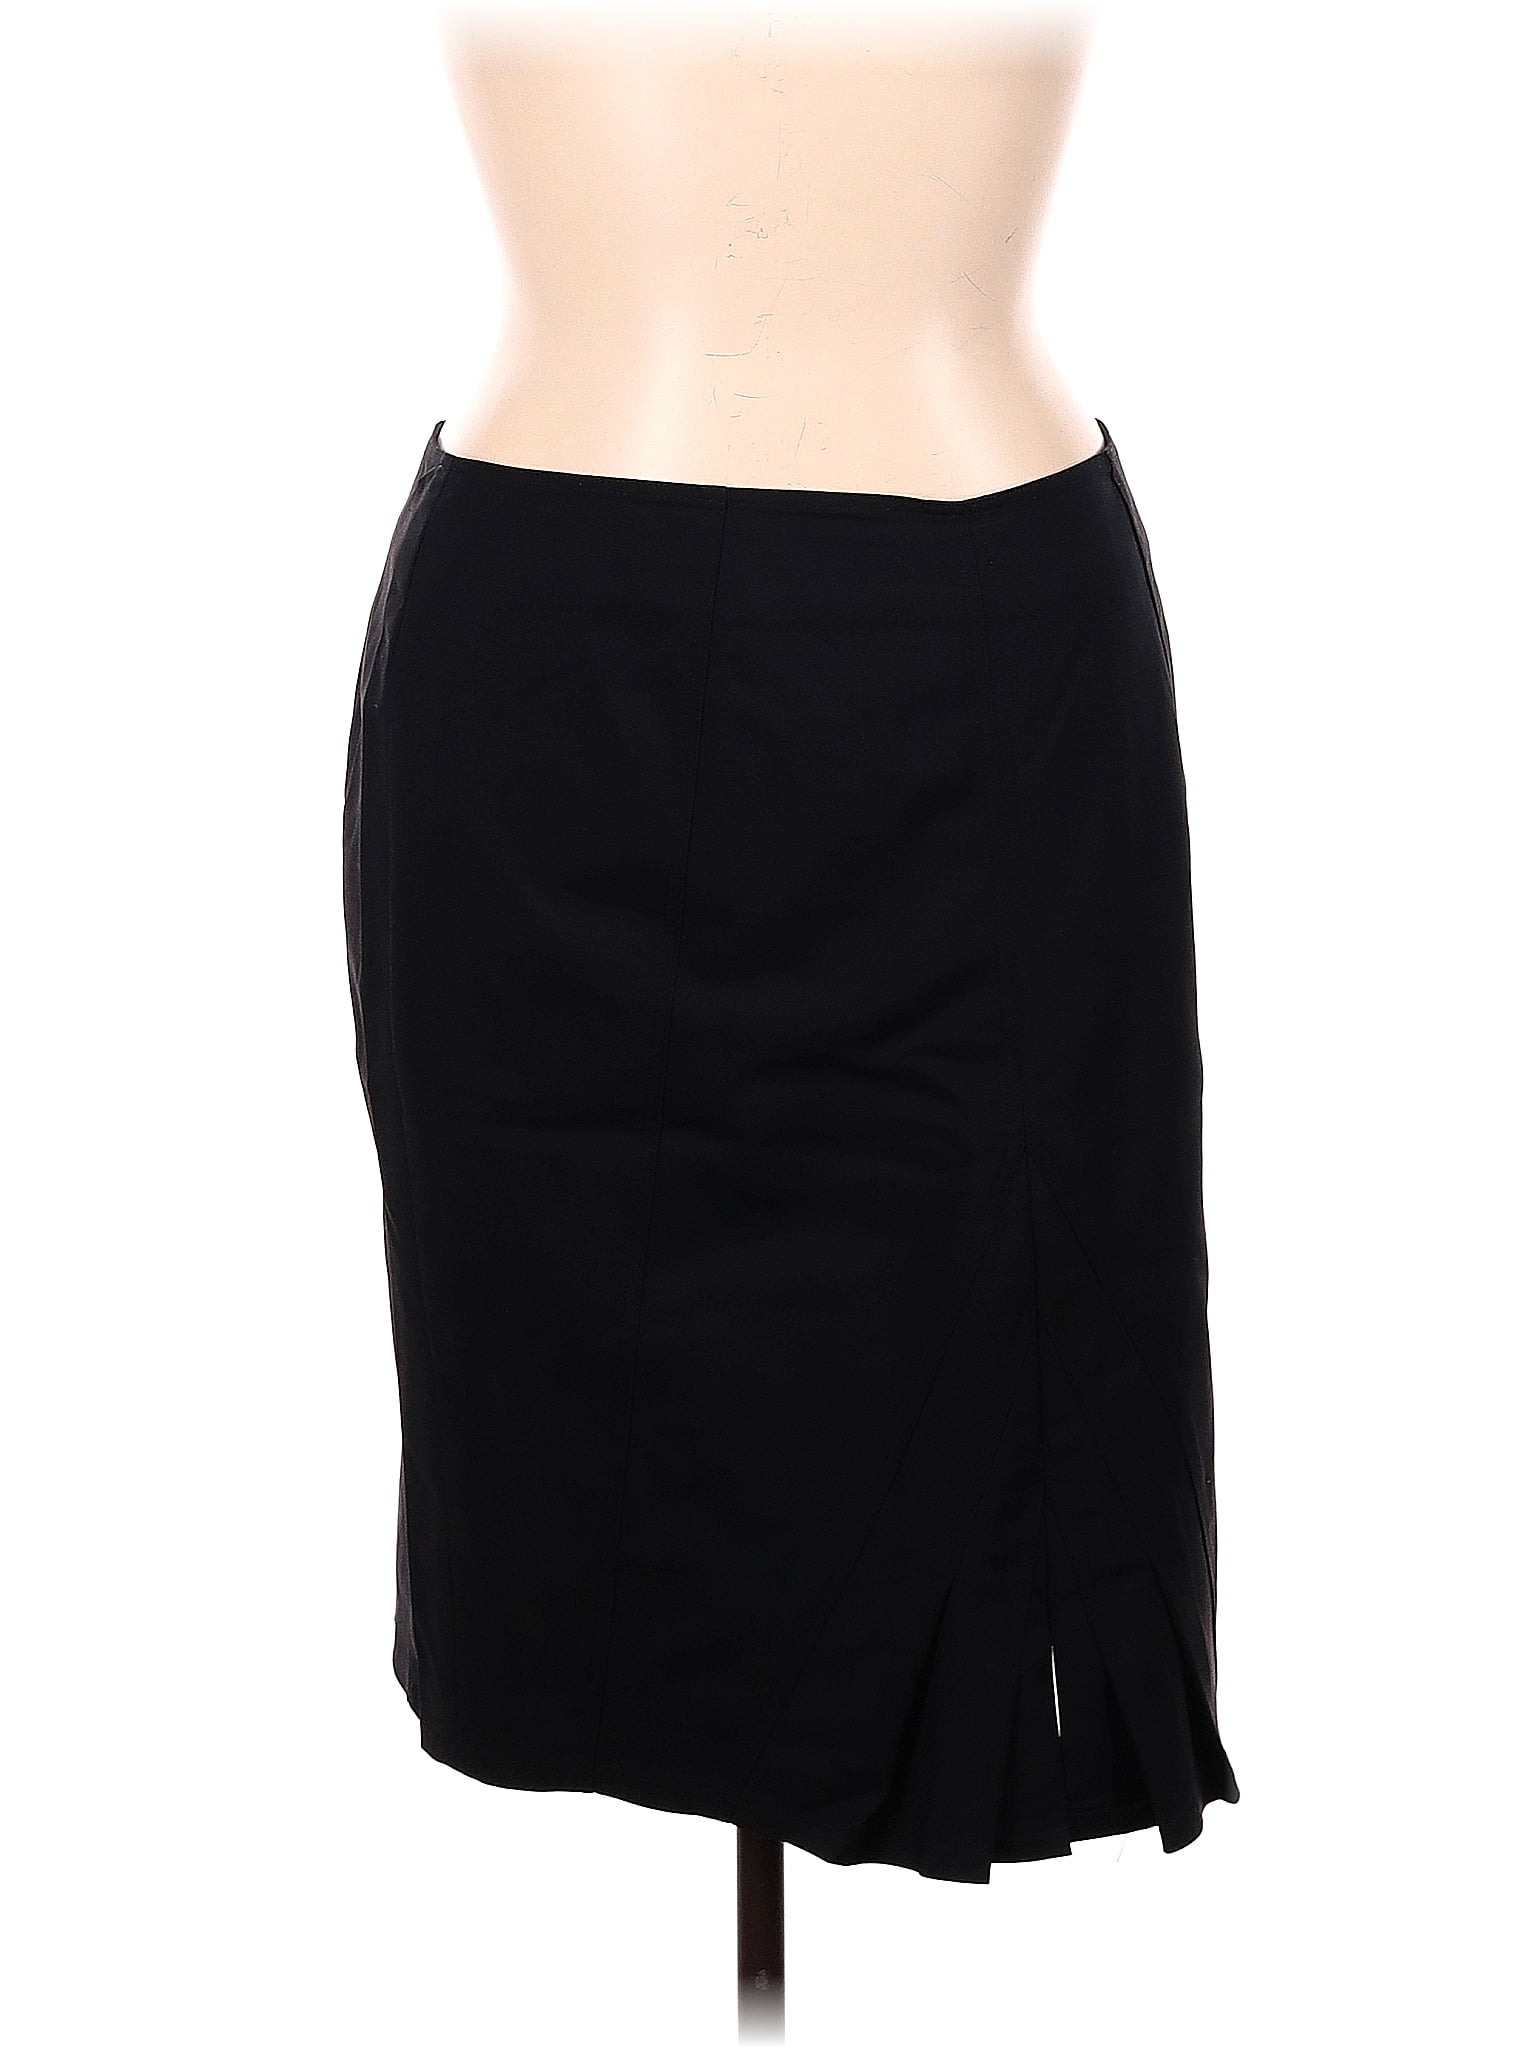 Juliana Collezione Black Casual Skirt Size 14 - 77% off | thredUP